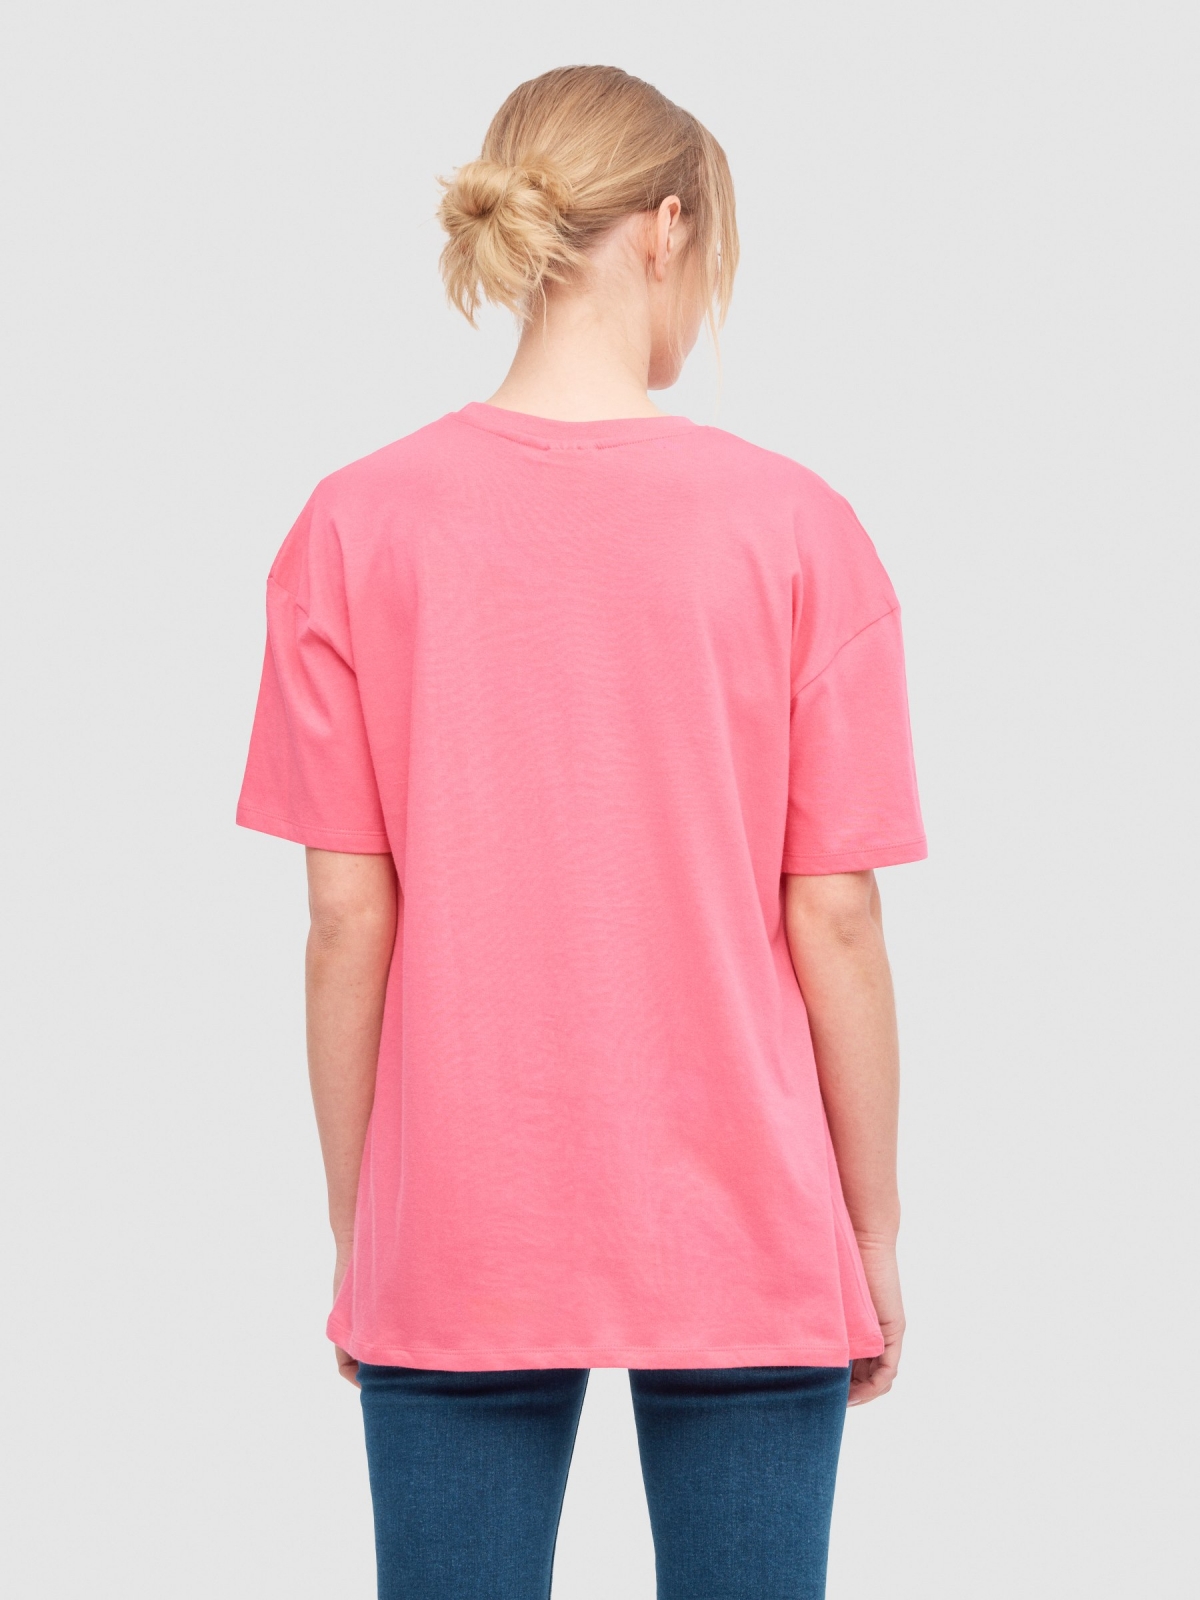 Camiseta oversize Barbie rosa vista media trasera